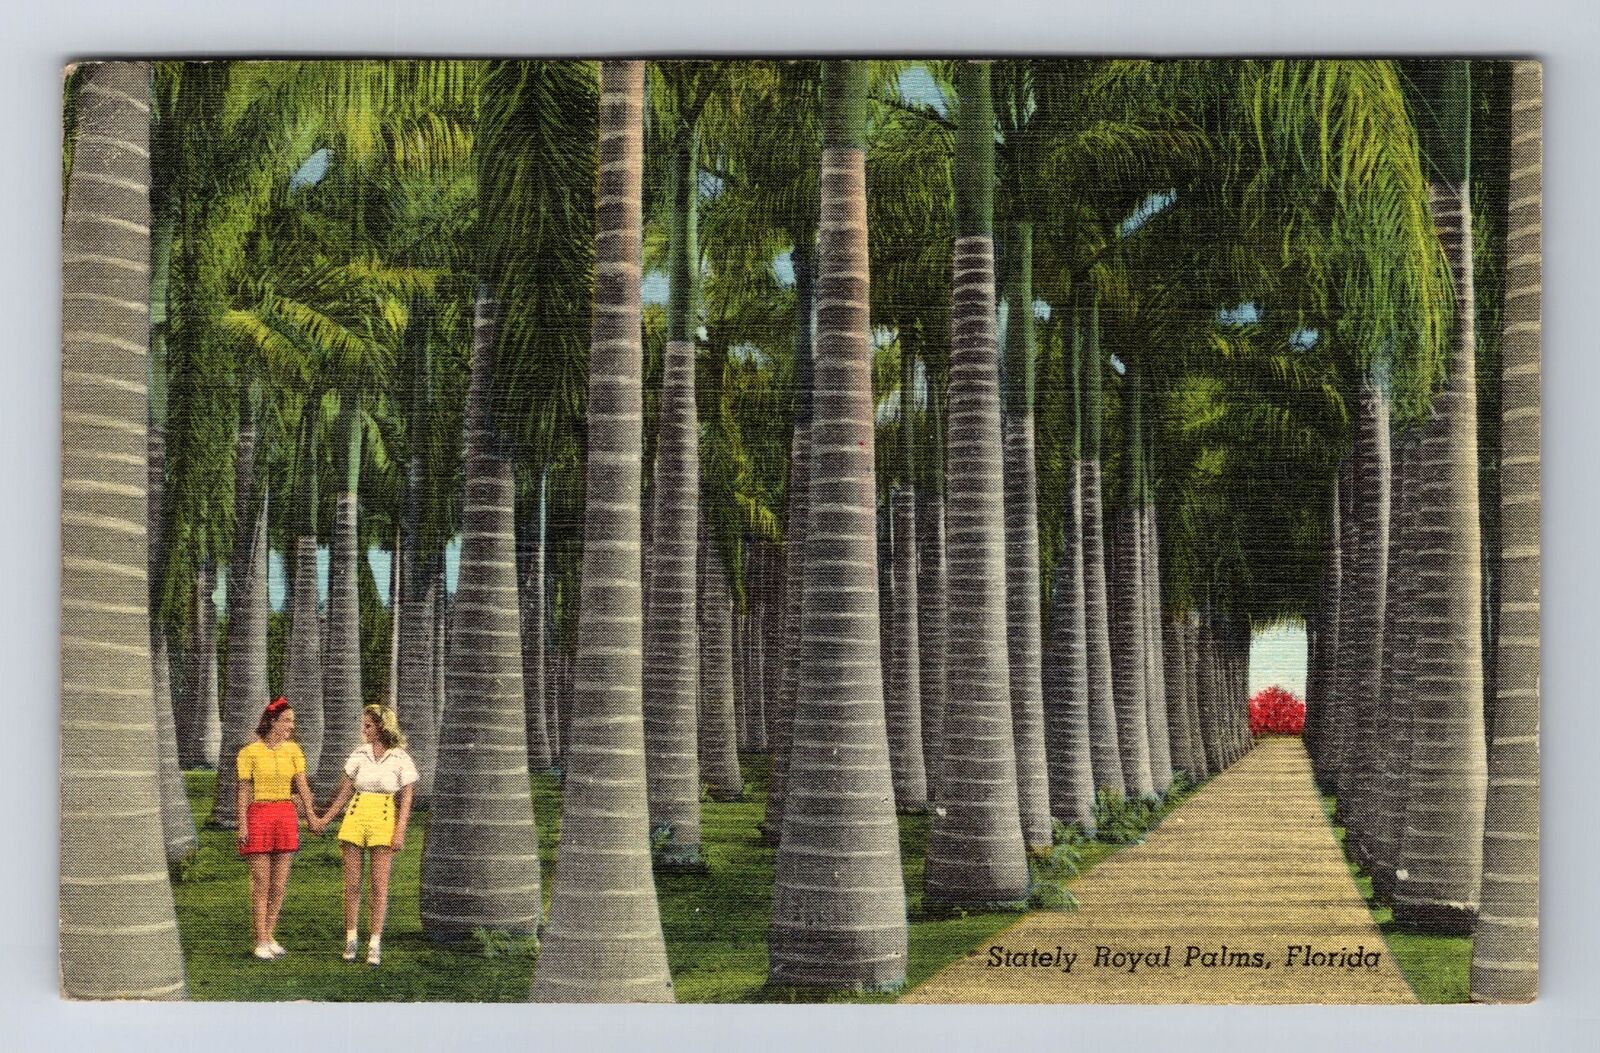 Royal Palms FL-Florida, Stately Royal Palms, Antique, Vintage c1947 Postcard